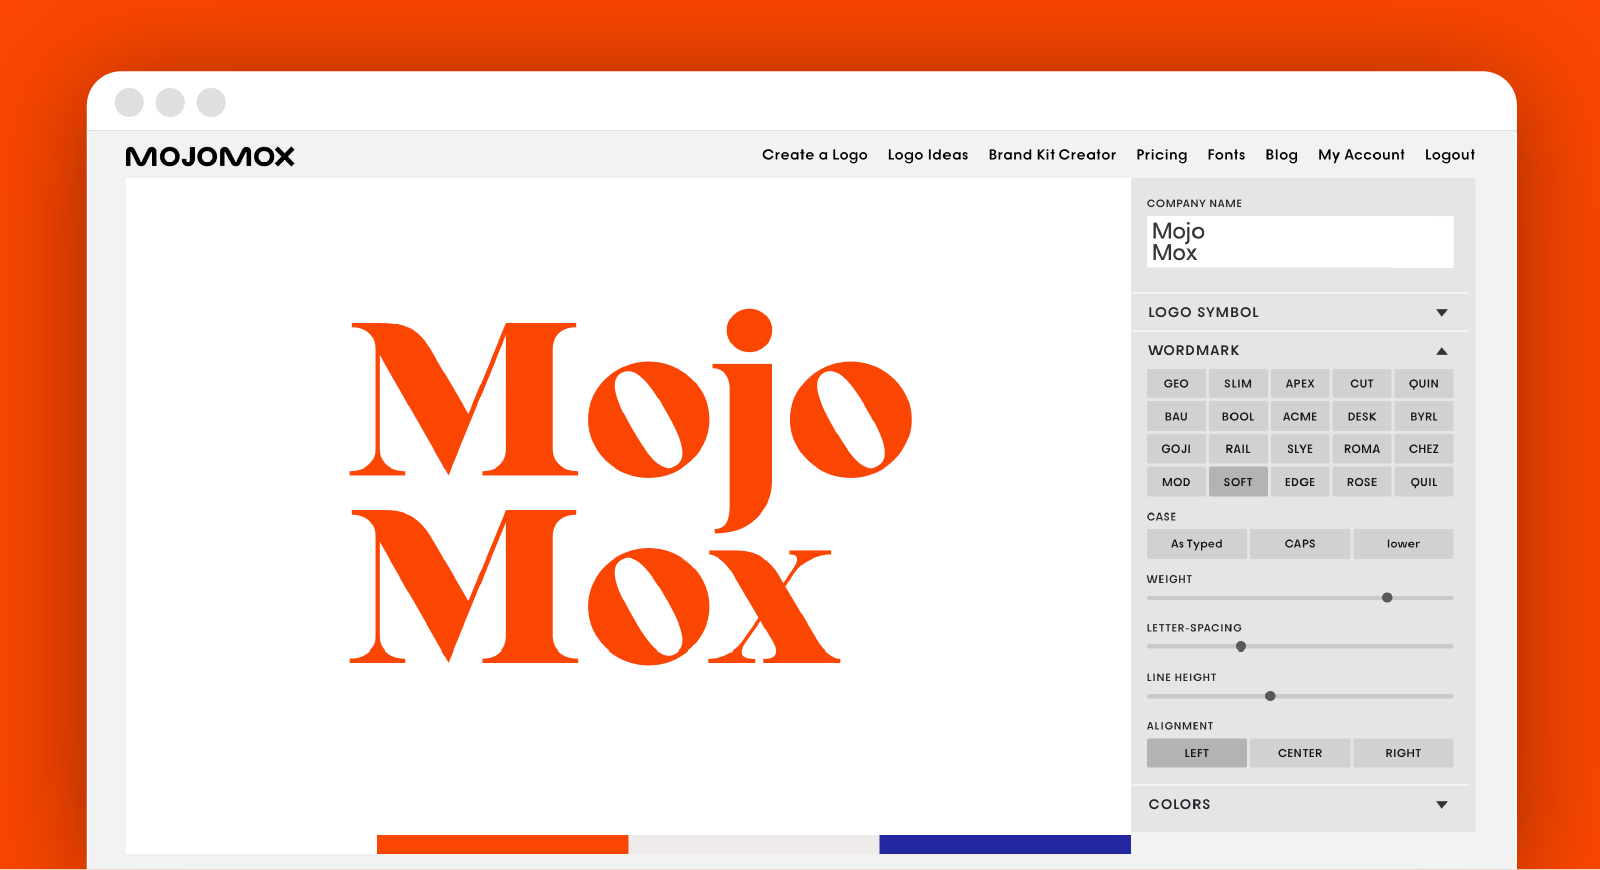 Mojomox multiline logo